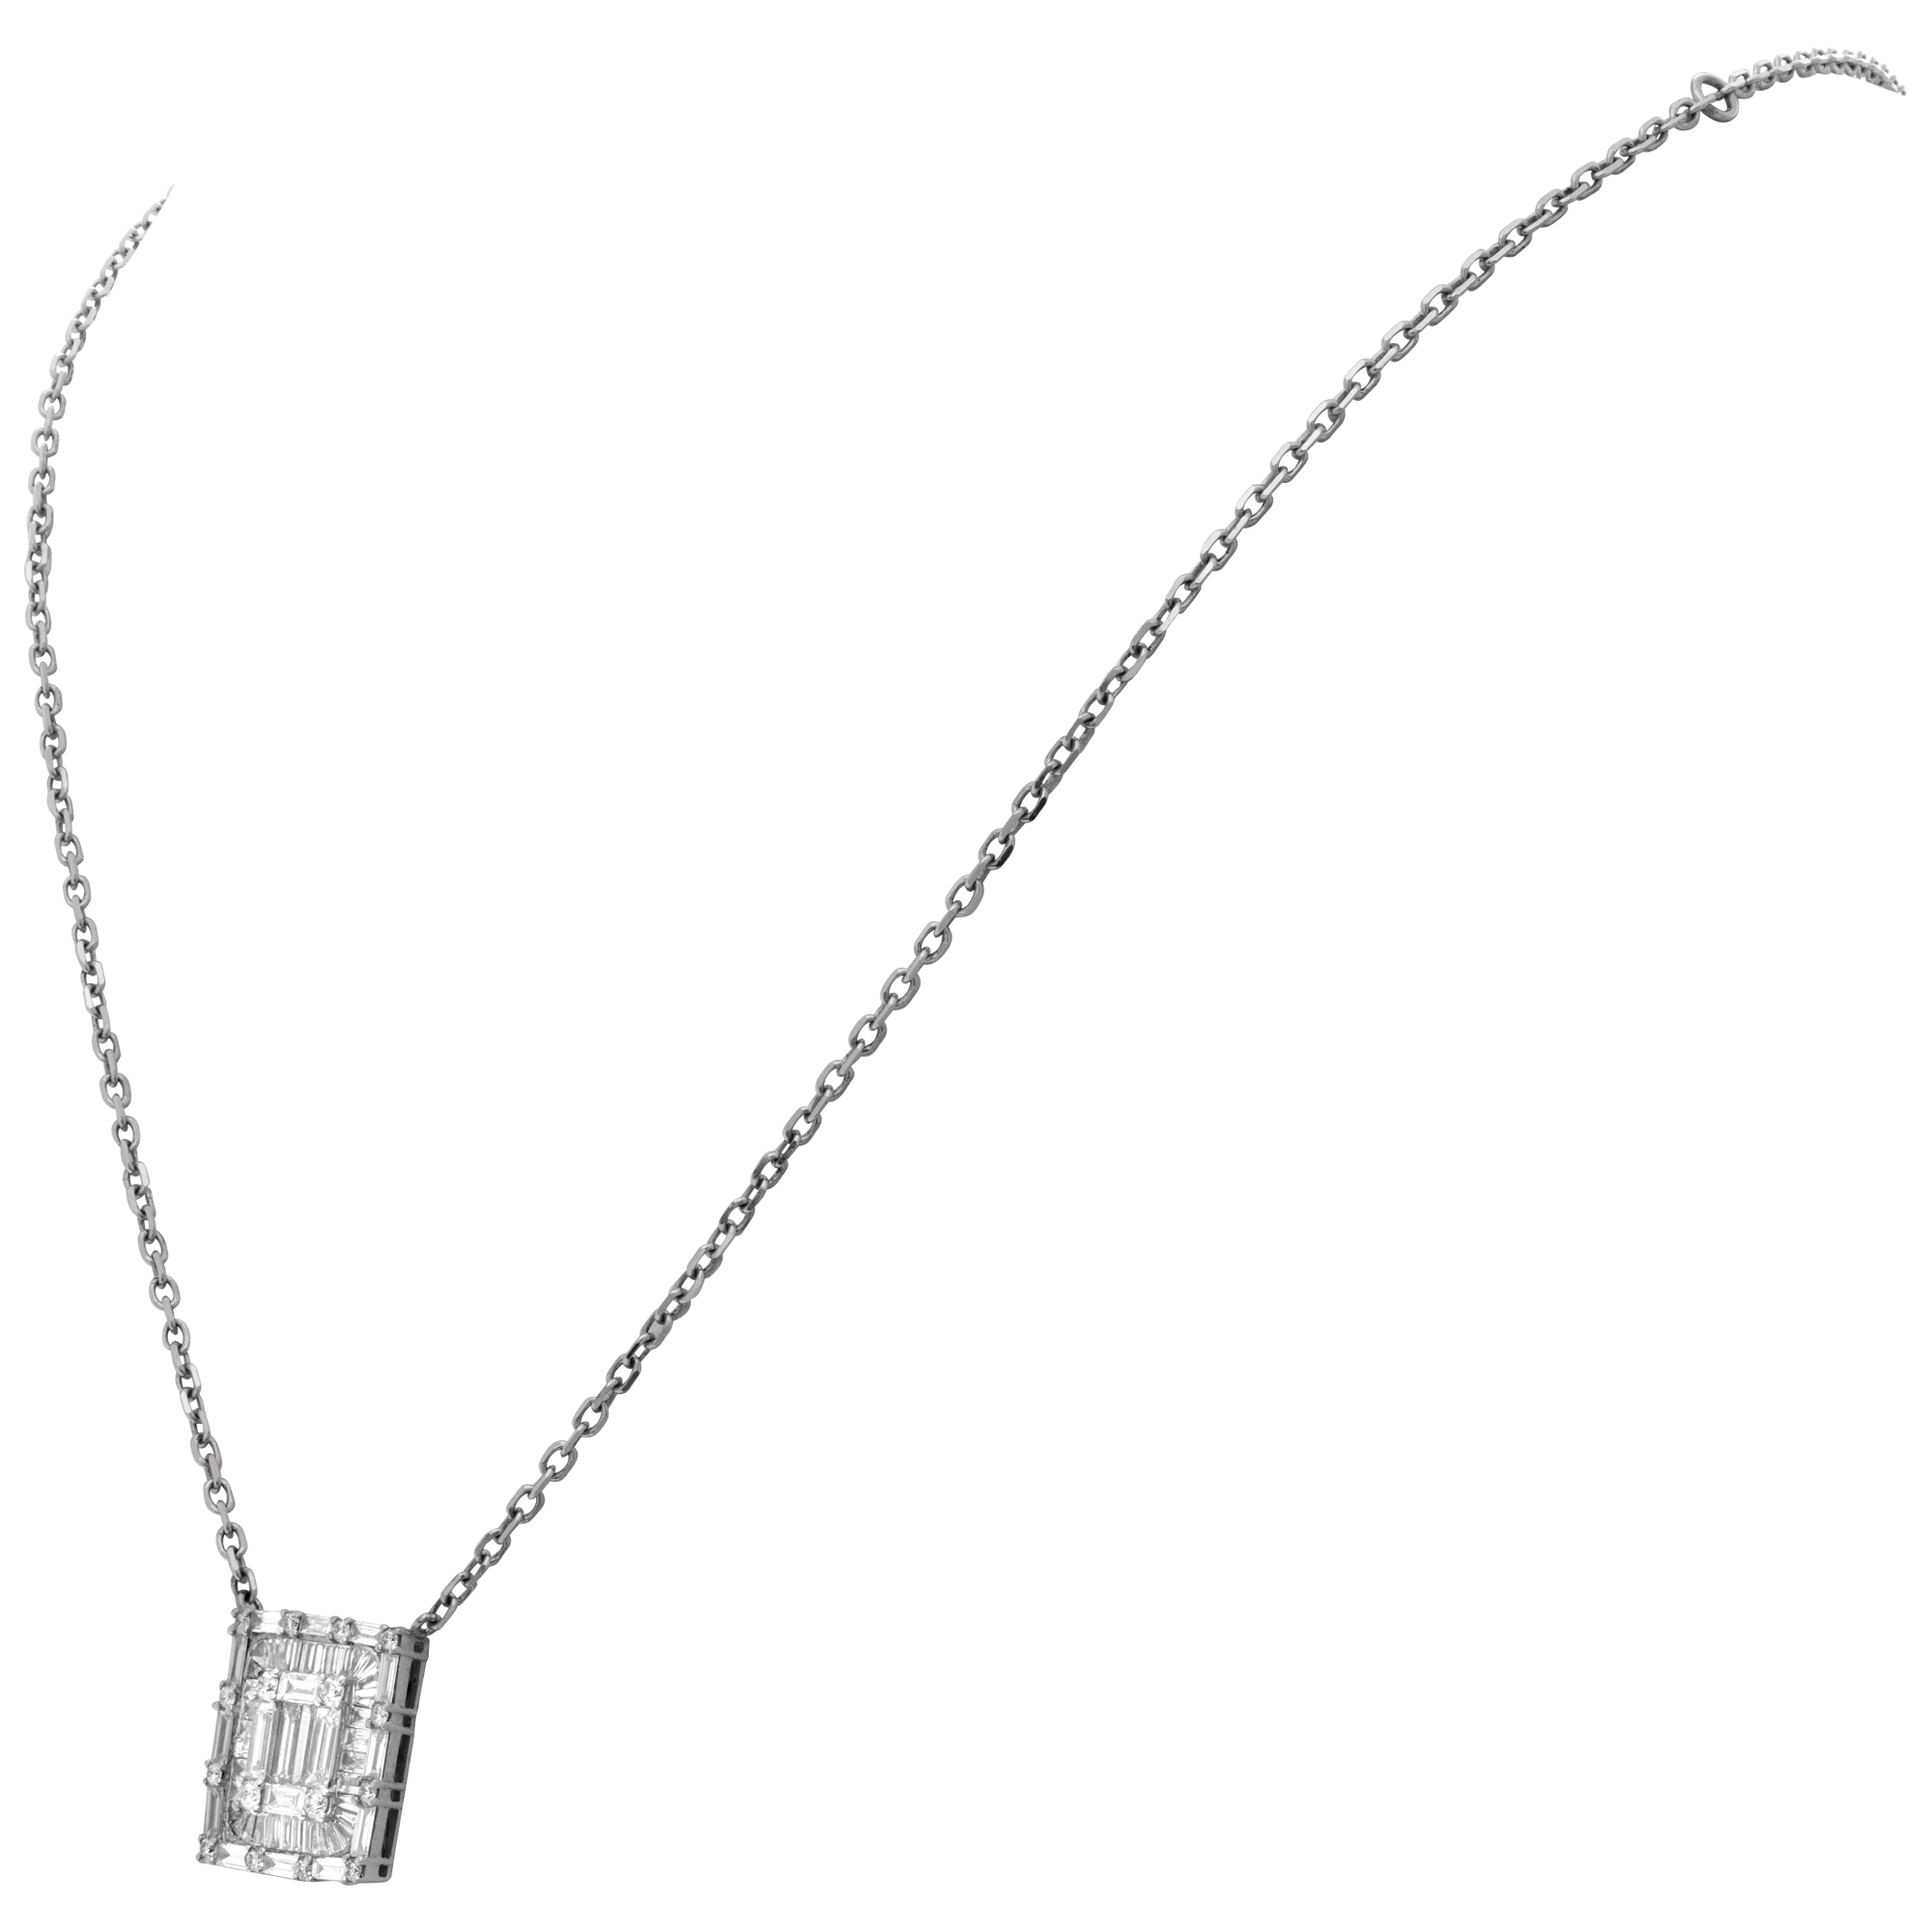 Illusion set diamond pendant necklace in 14k white gold (Stones)